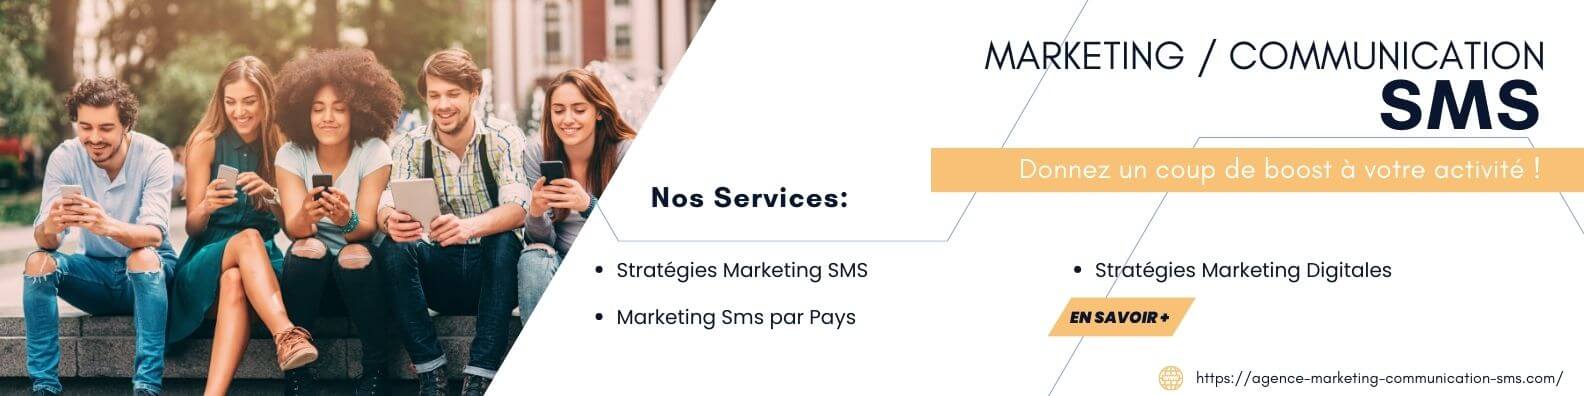 banner-agence-marketing-communication-sms.com-2-1